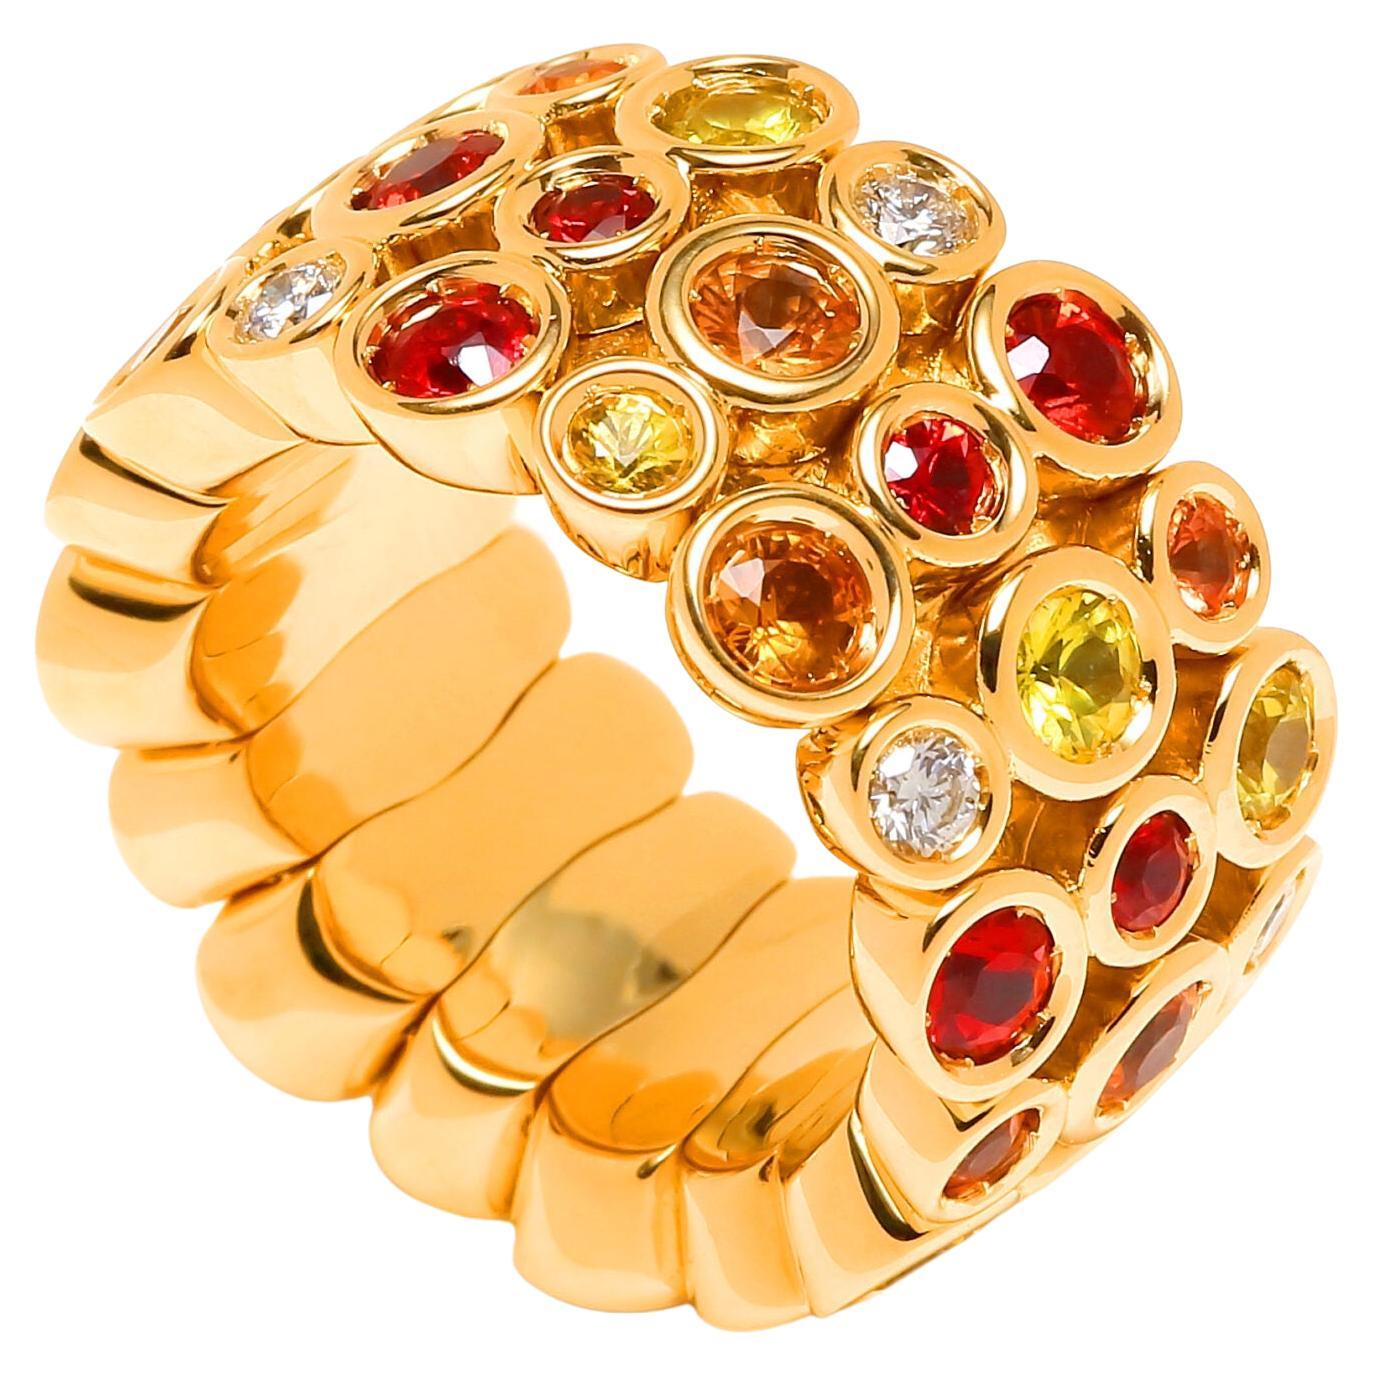 Modern Round Sapphires, Rubies & Diamonds Ring Set in 18K Yellow Gold